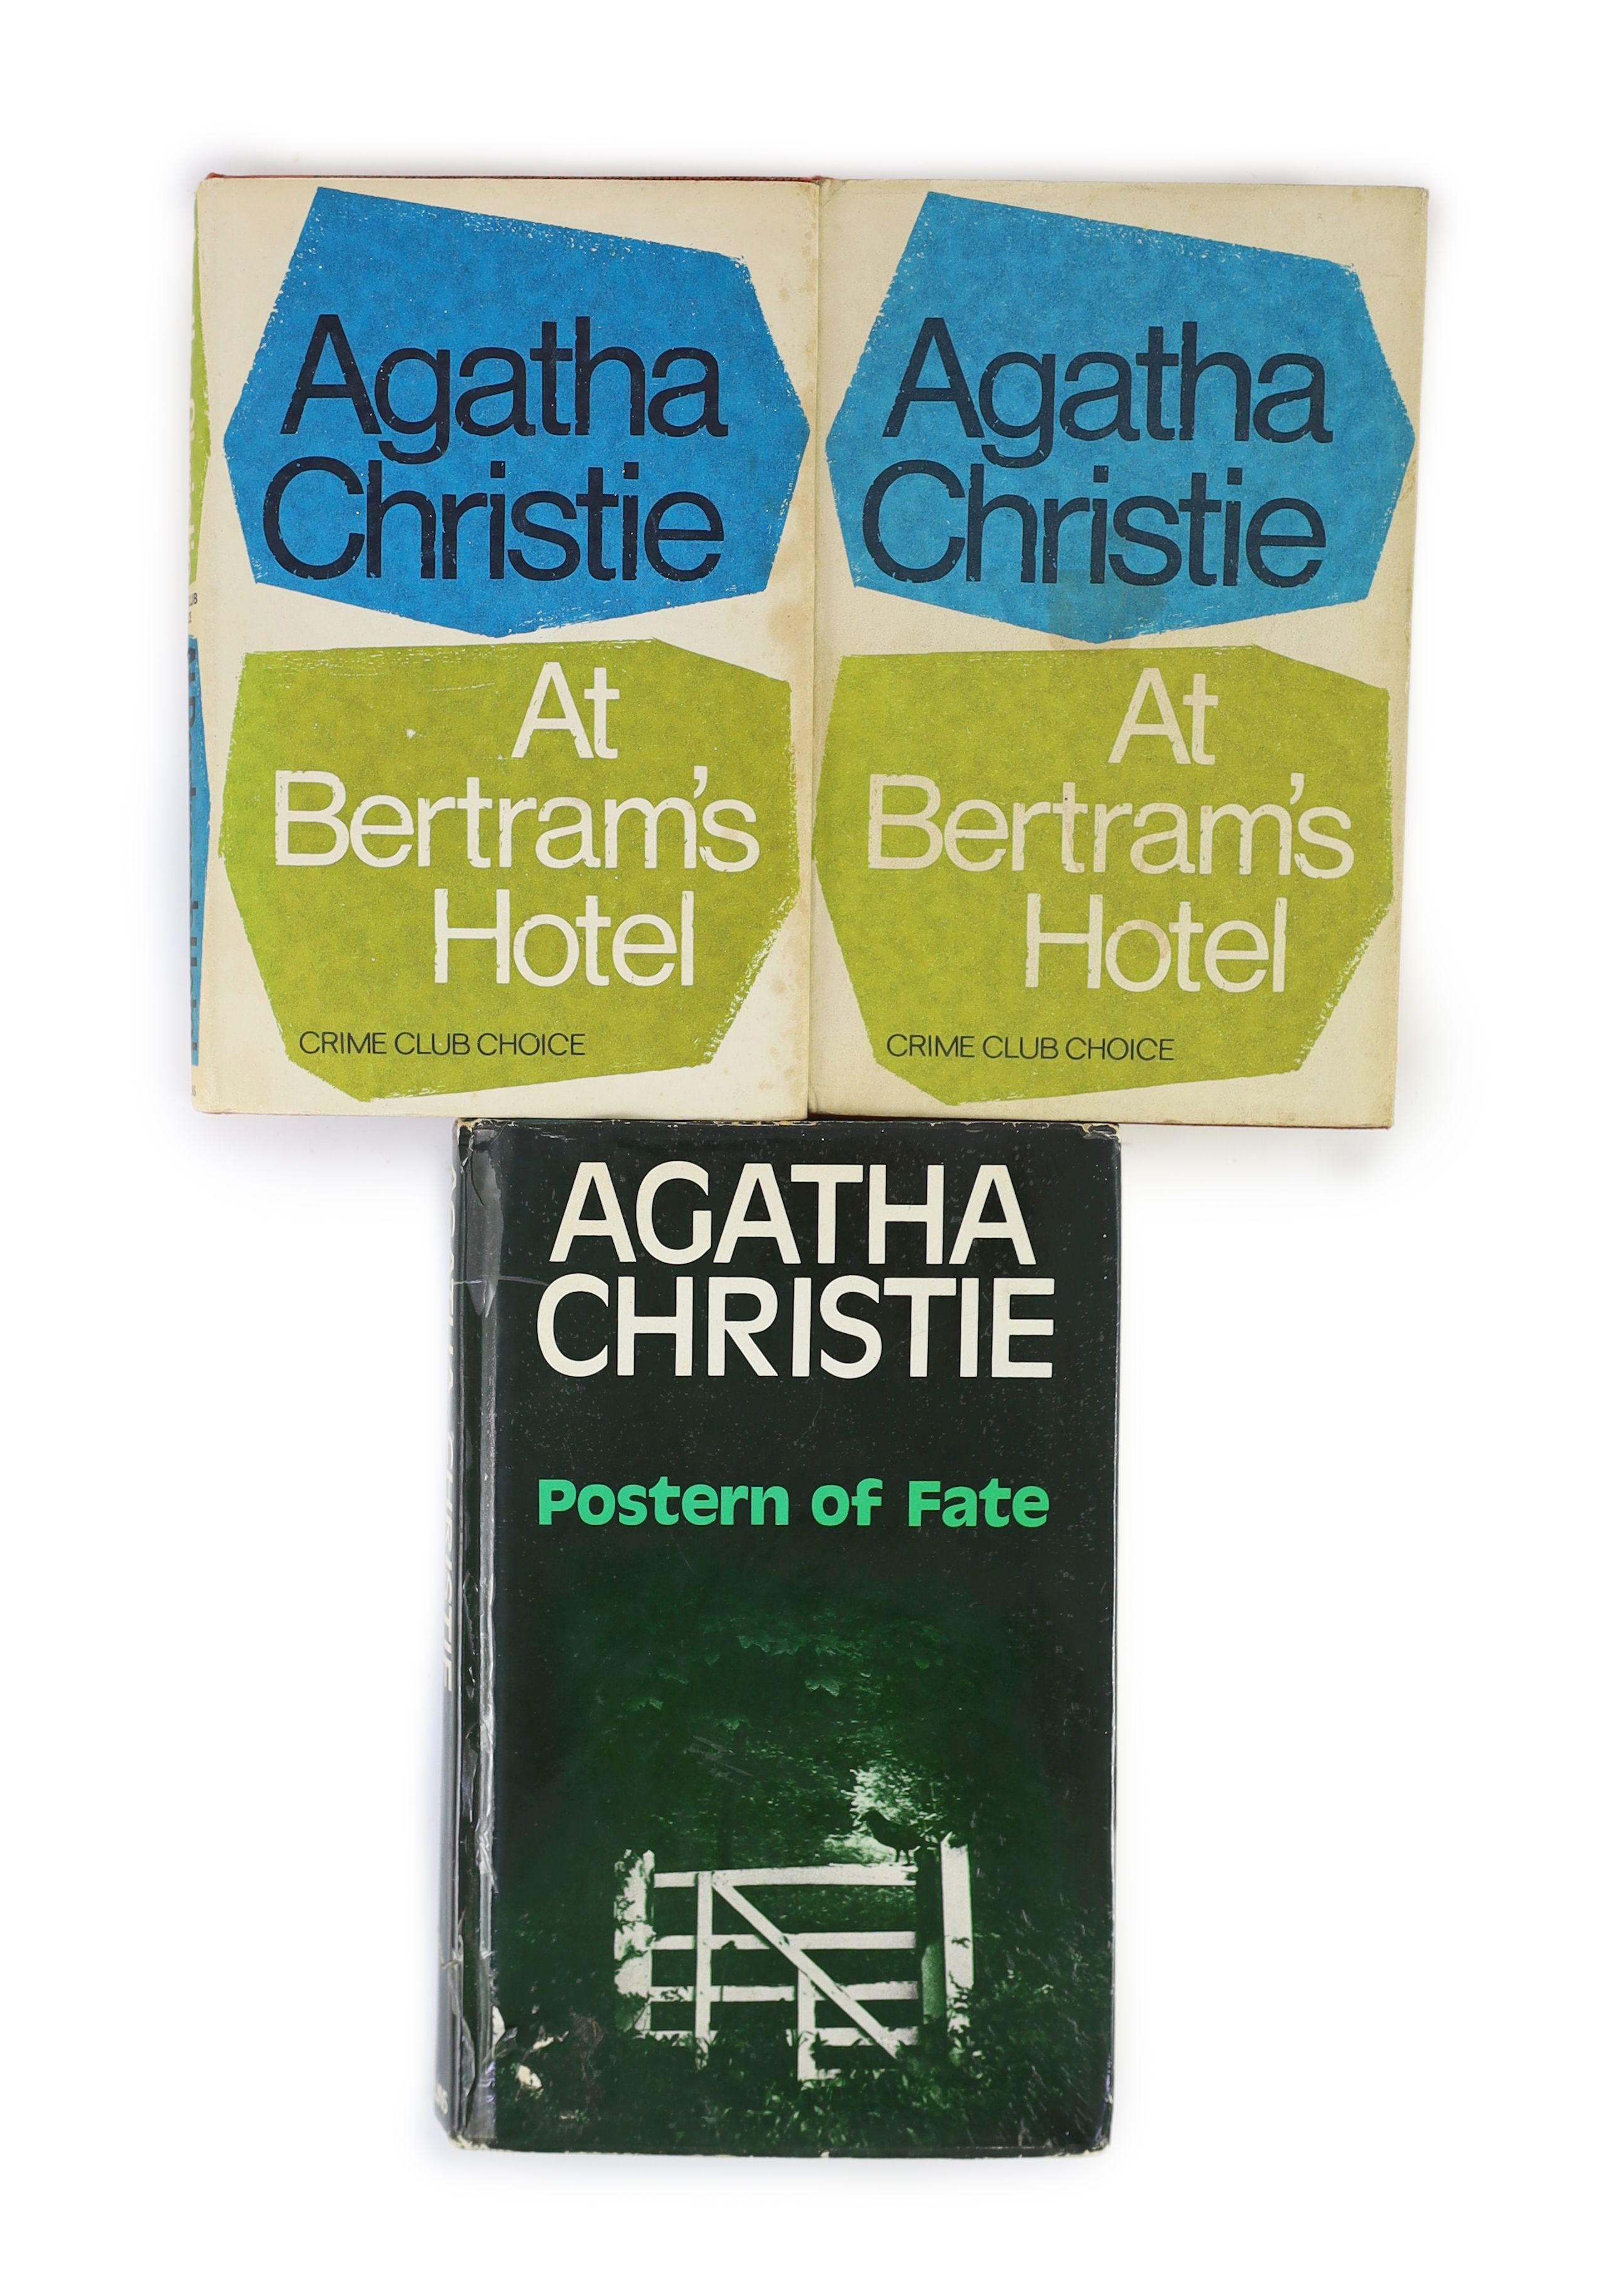 Christie, Agatha - Three works - At Bertram’s Hotel